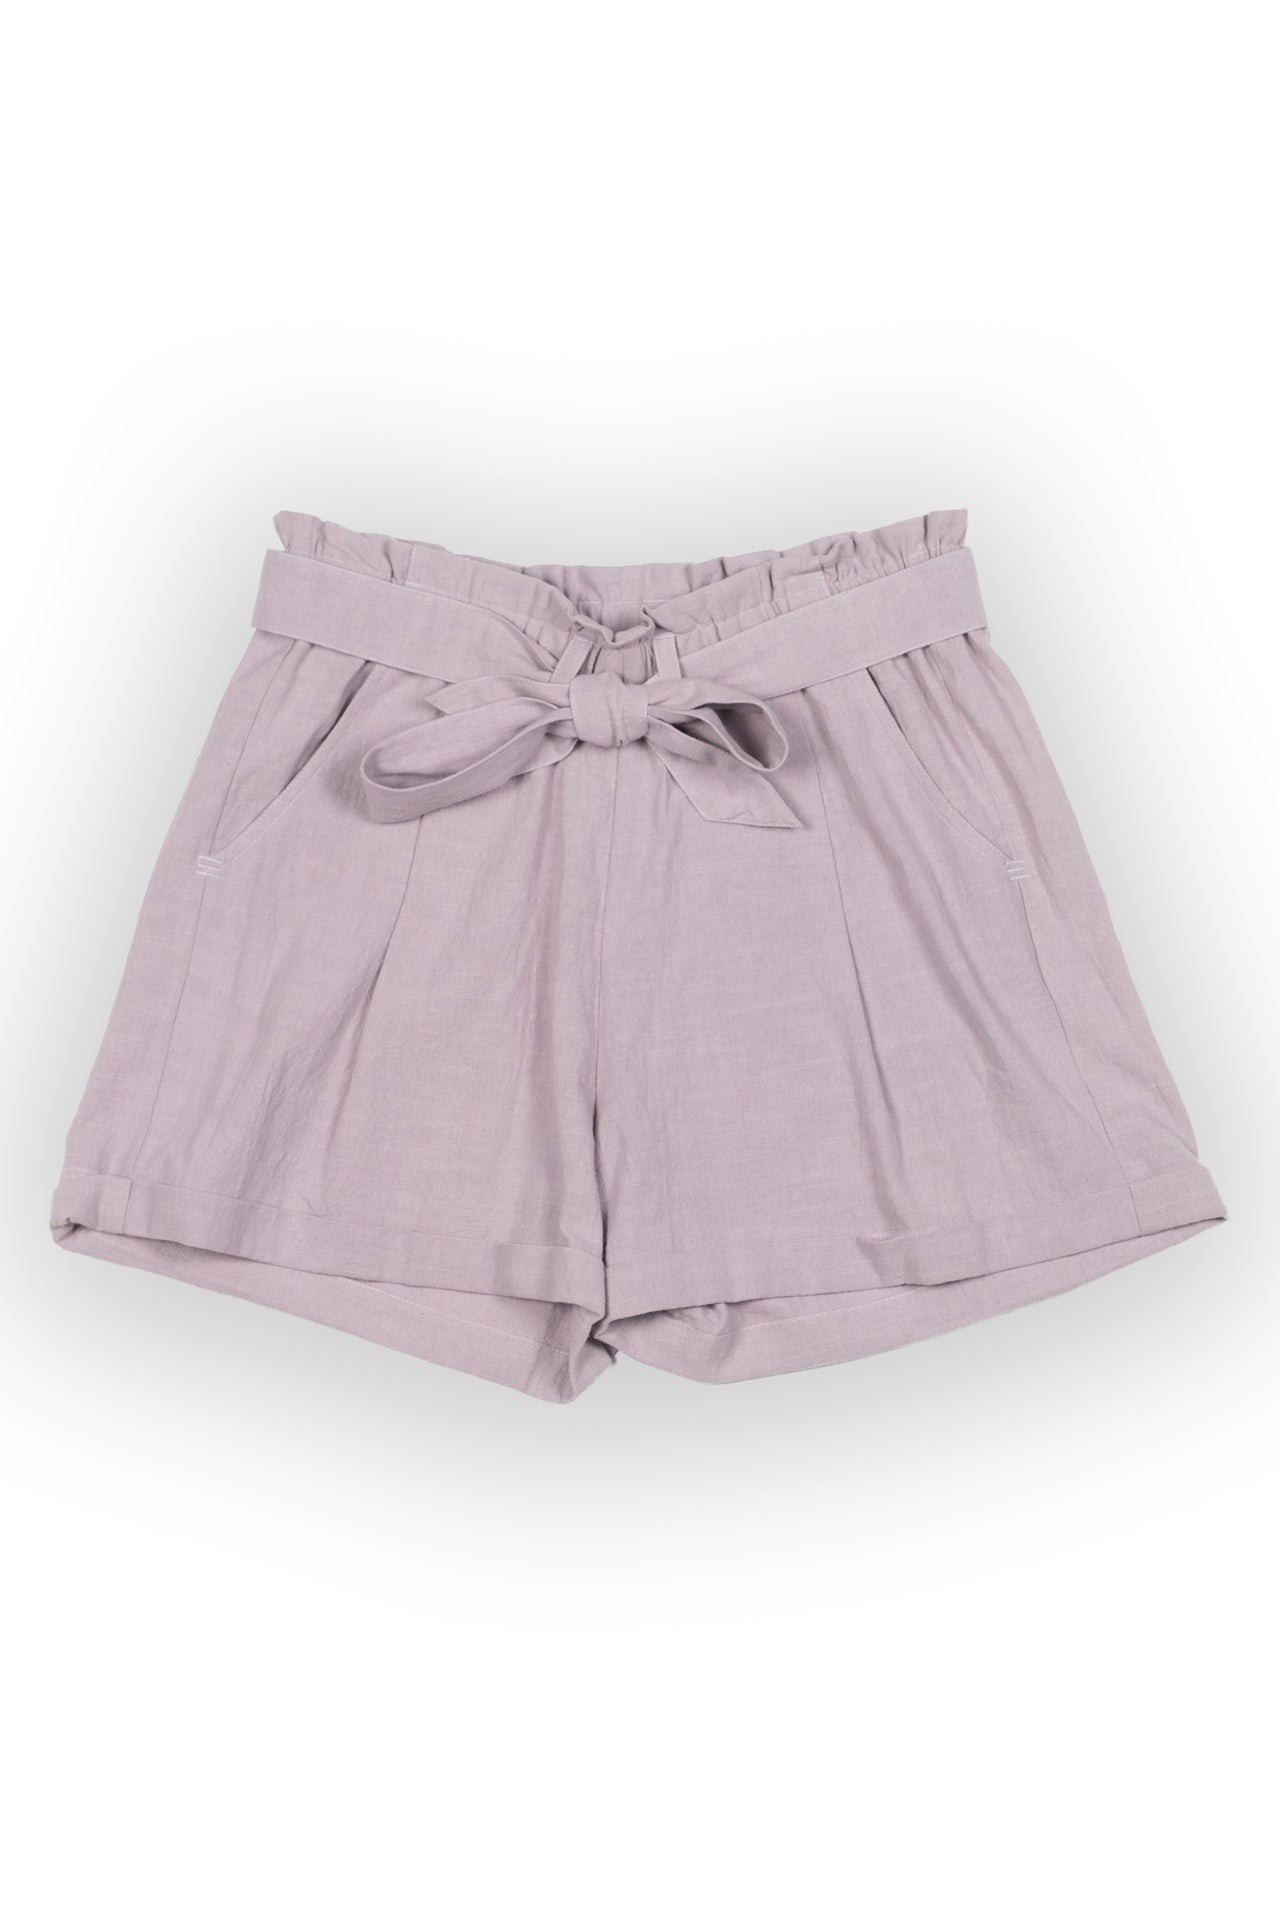 Mabel Mauve Paperbag Waist Shorts - Rupert and Buckley - Shorts